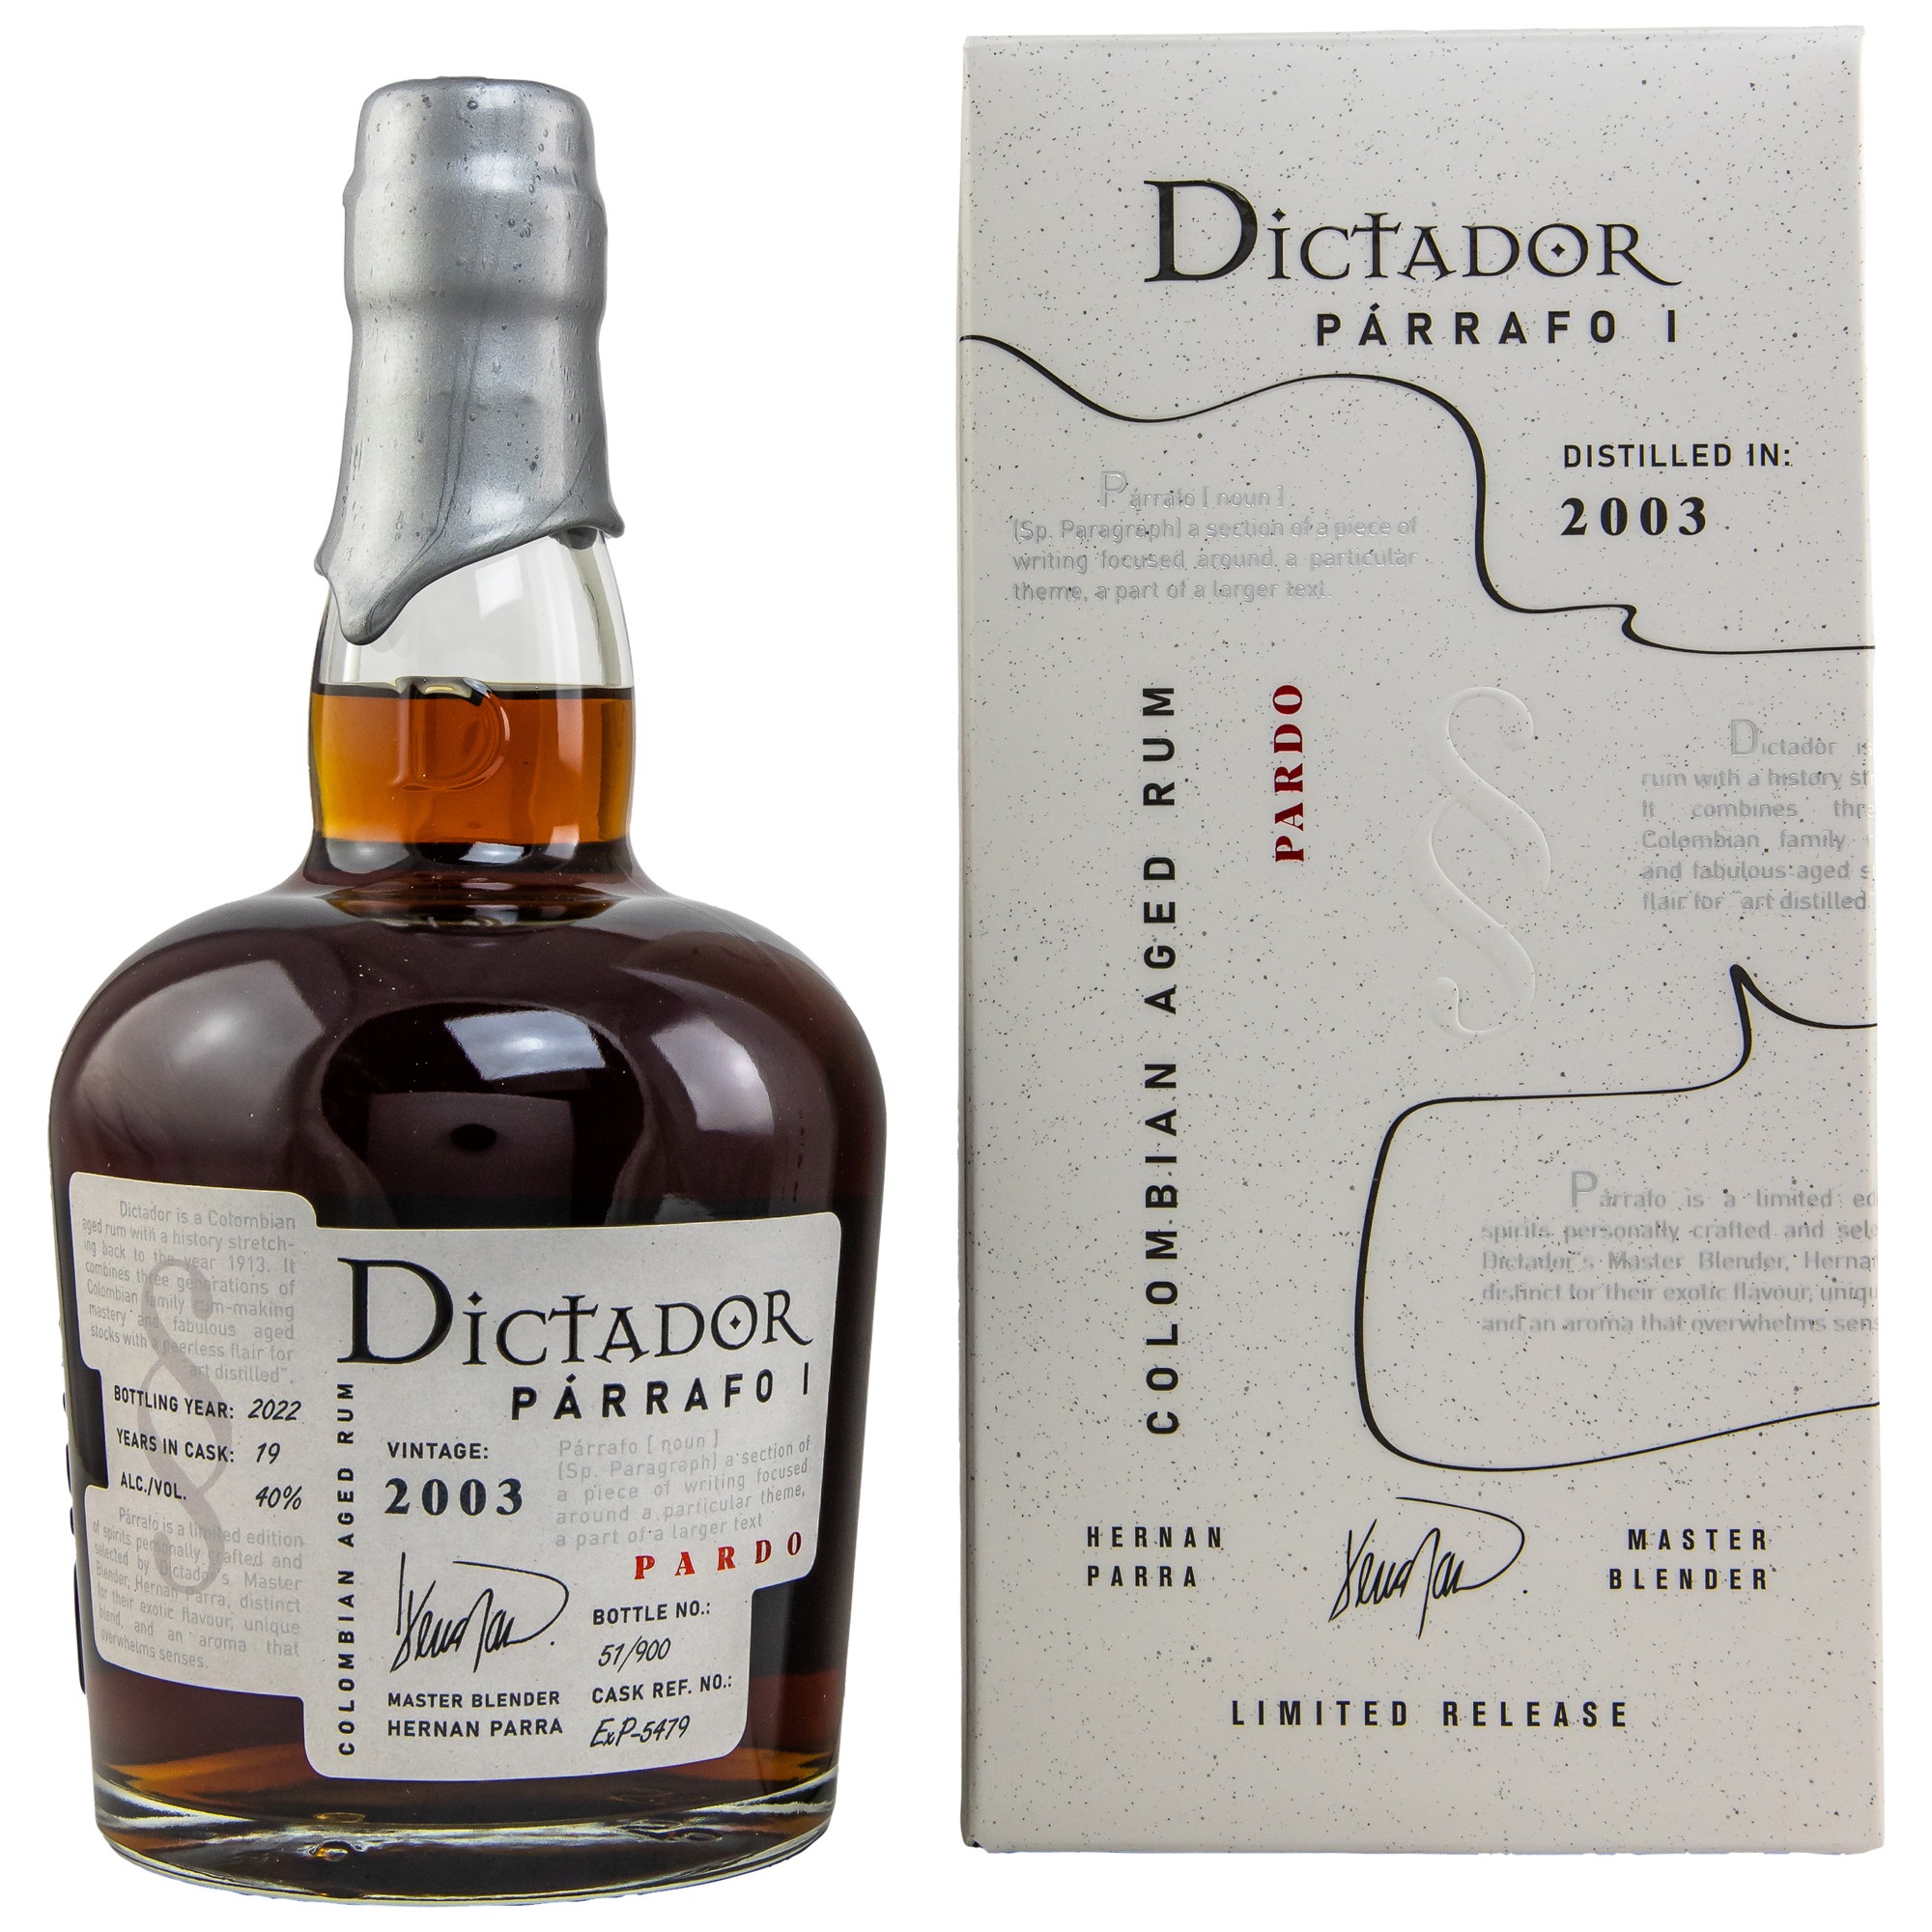 Dictador Parrafo I Pardo Rum 19 Jahre 2003/2022 Single Cask 40.0% 0,7l